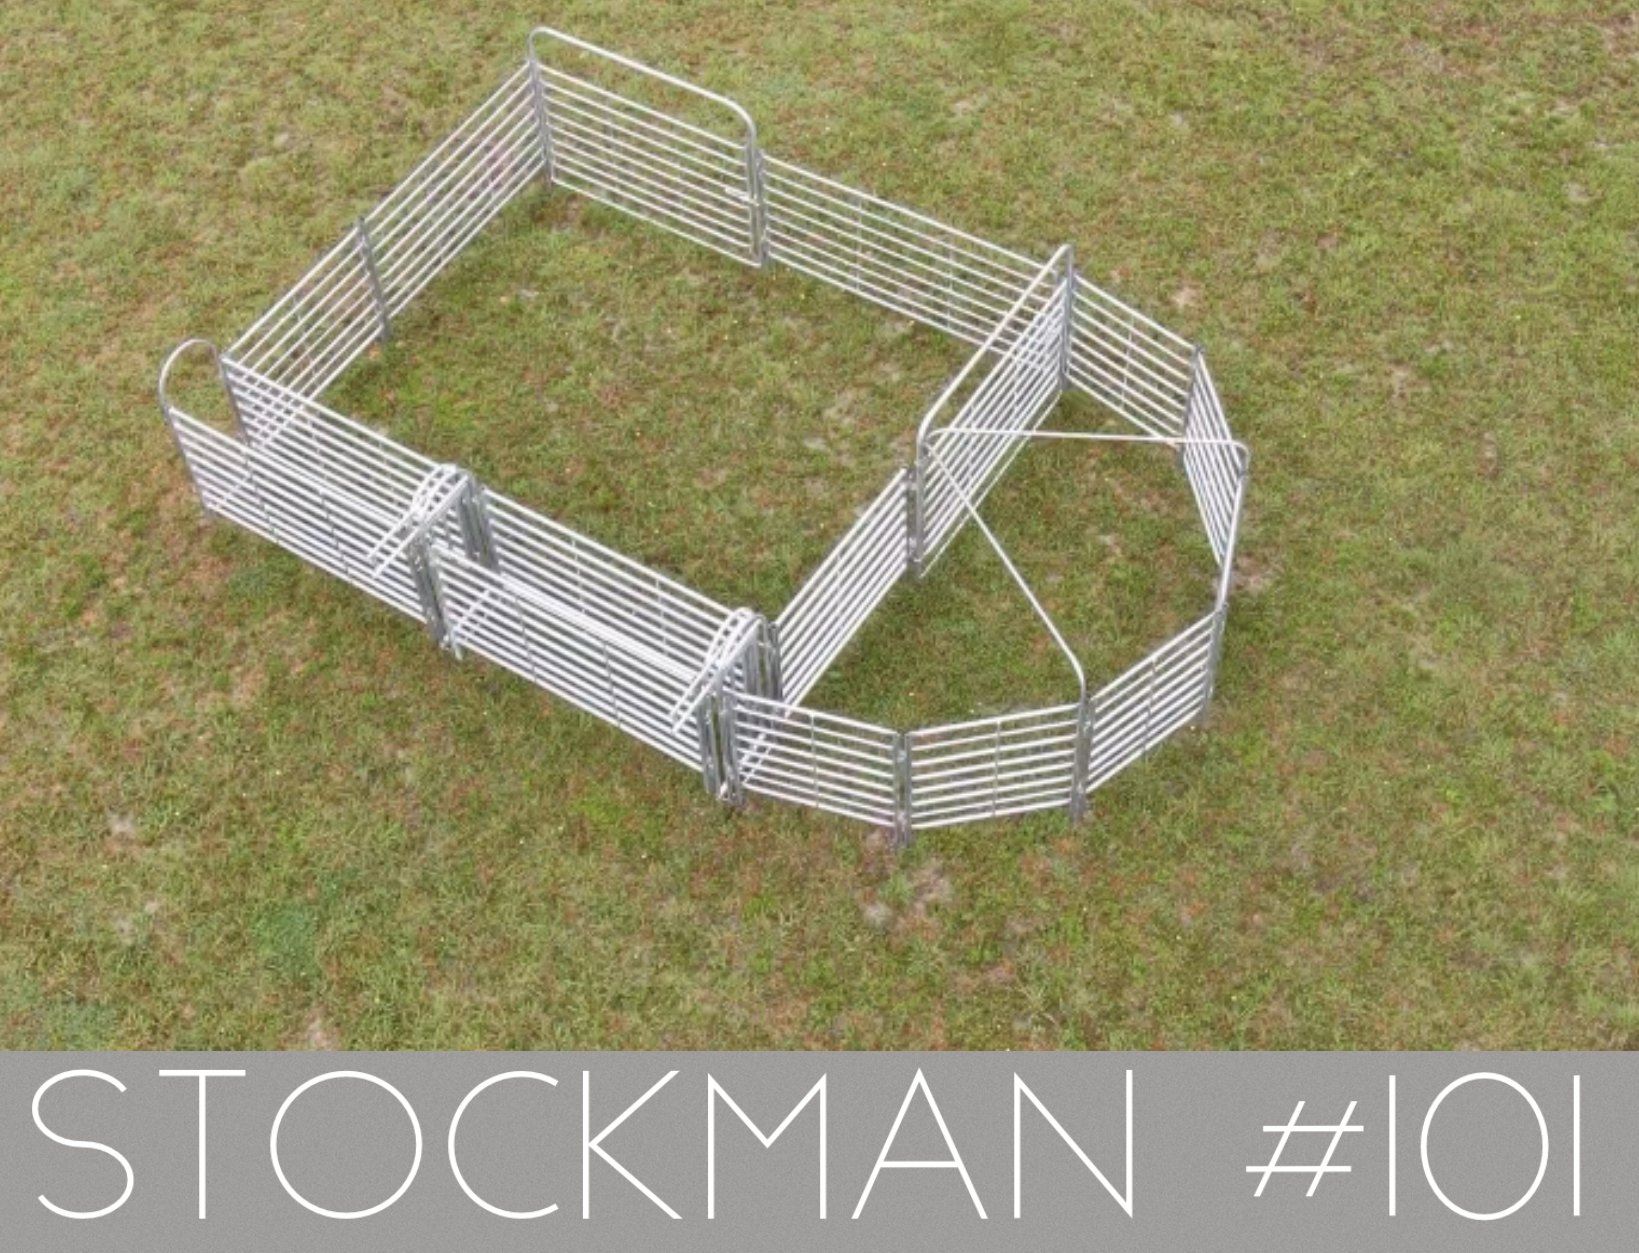 Stockman 101